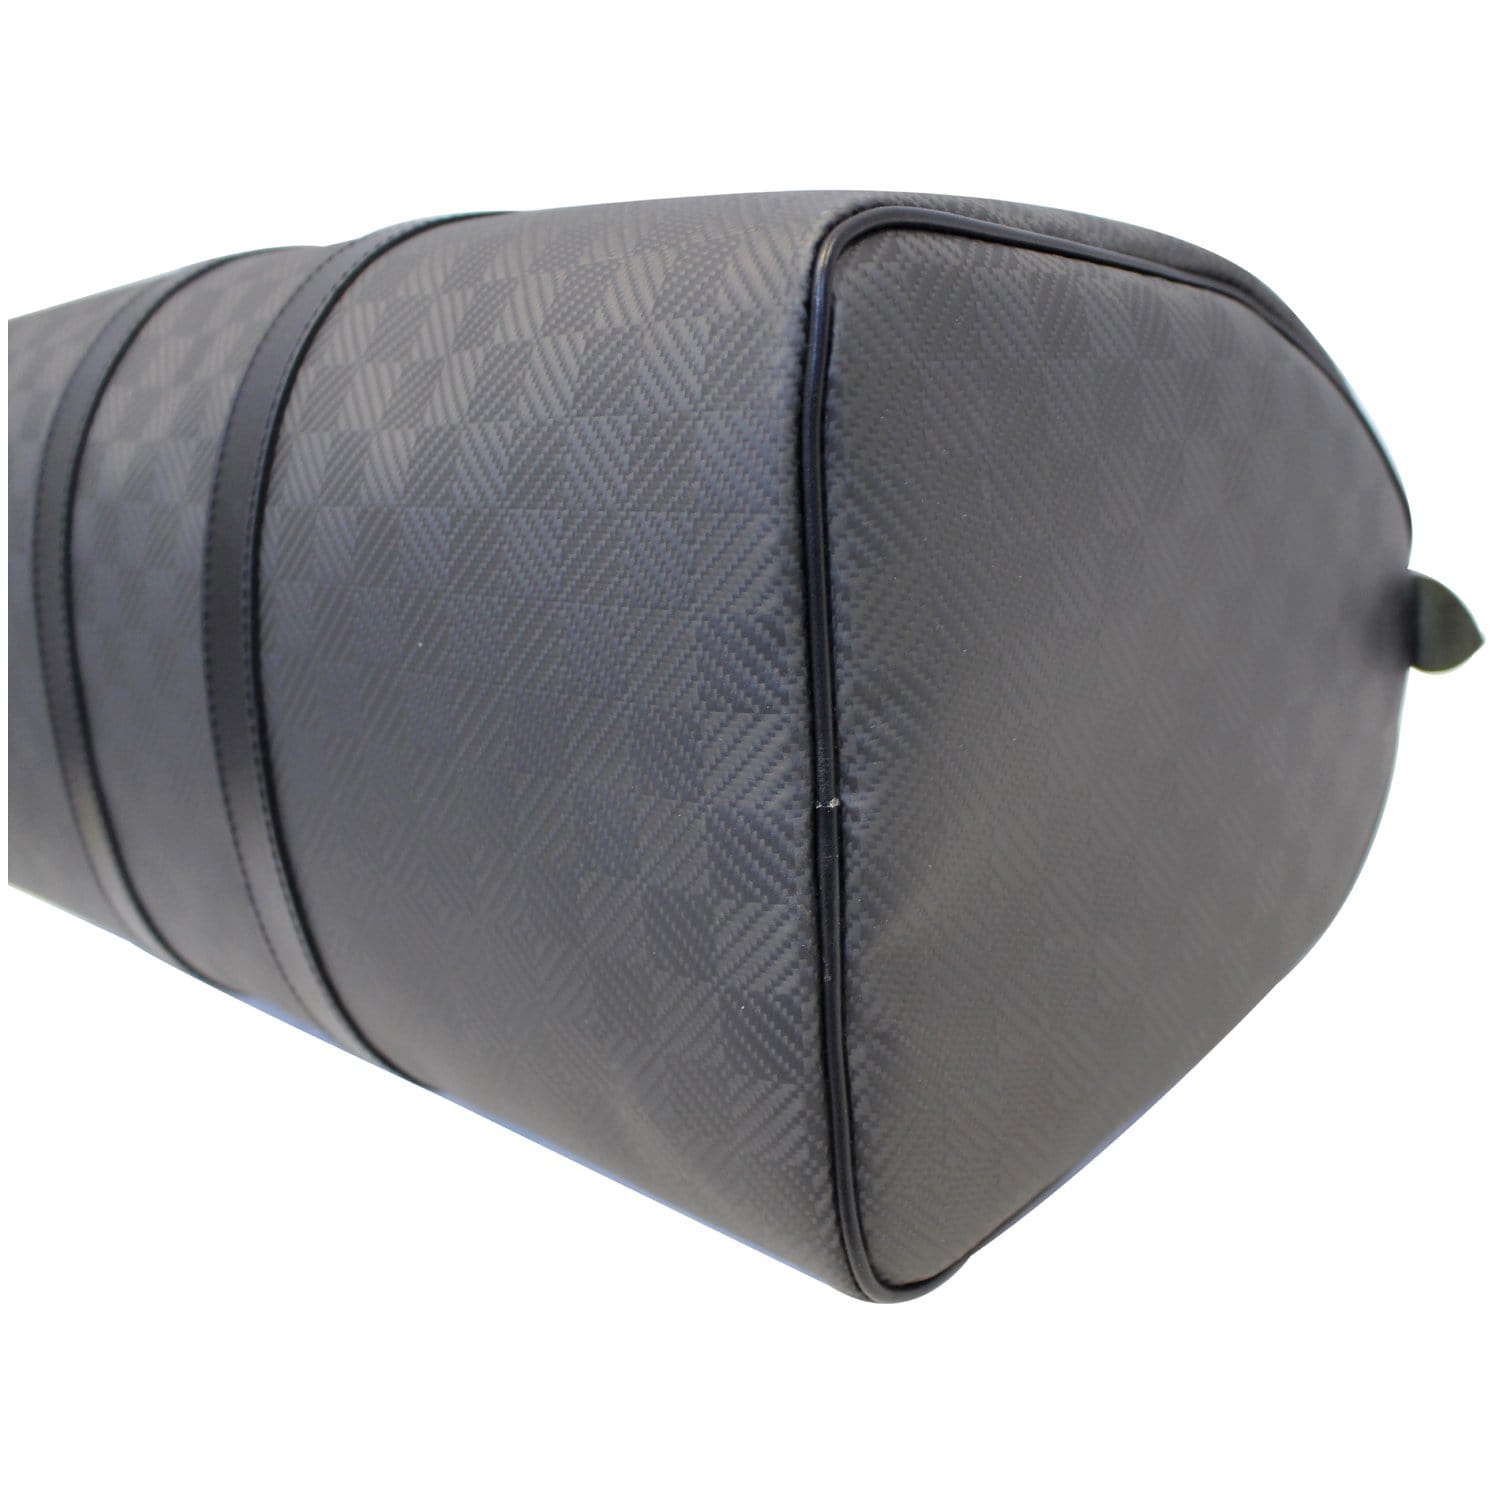 Louis Vuitton Keepall 45 Carbon Fiber Carbone Travel Bag